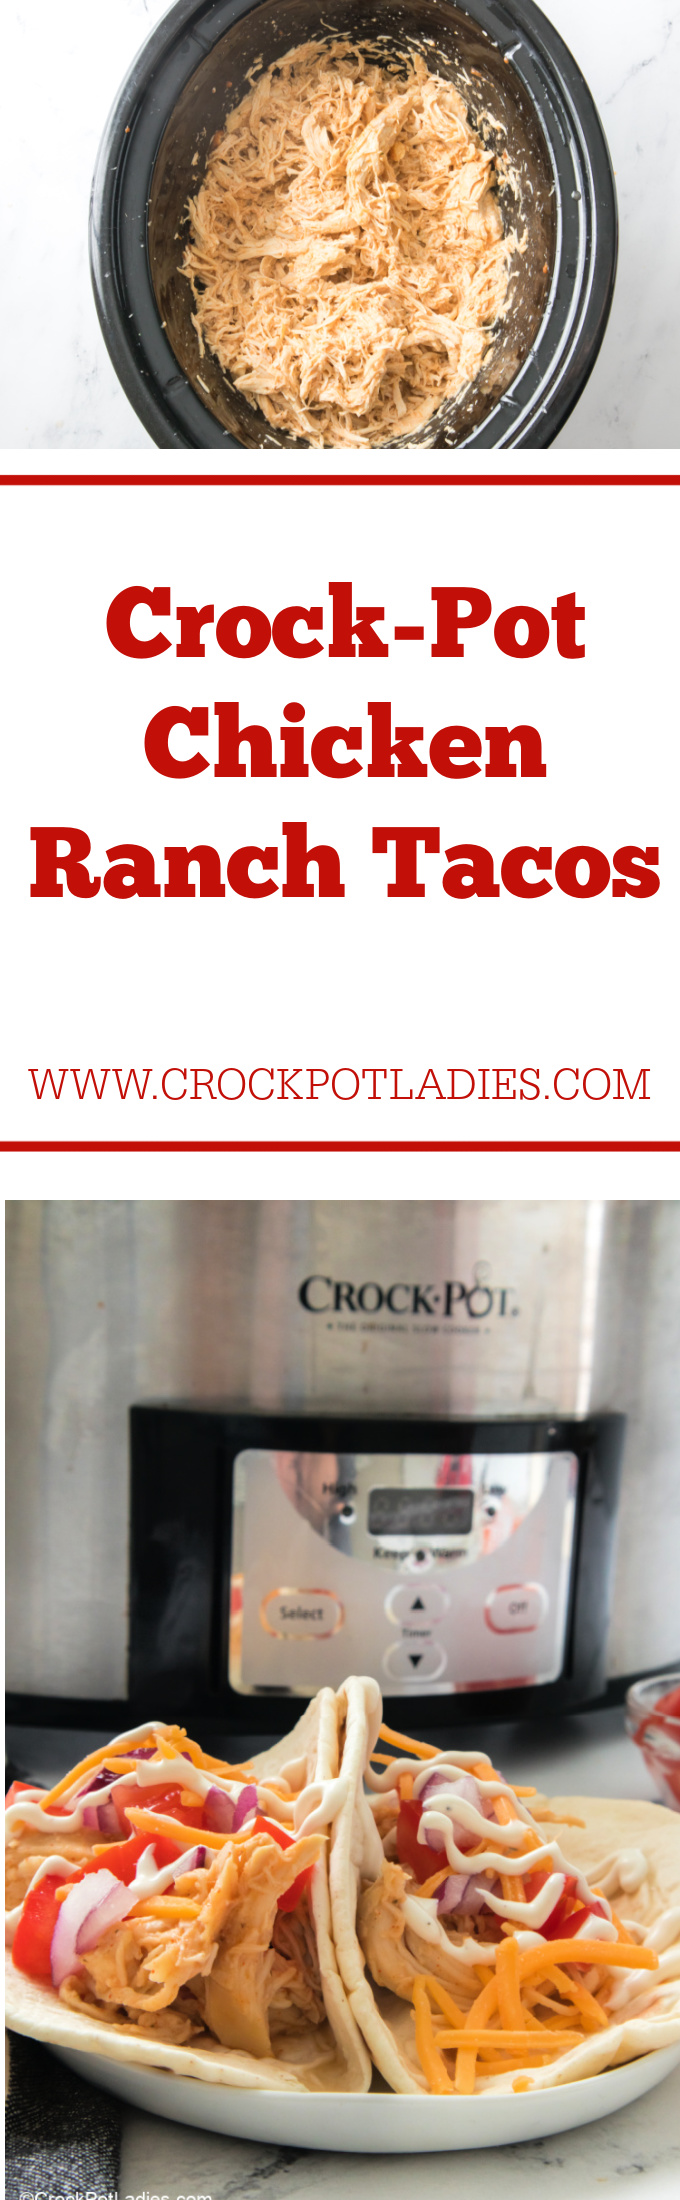 Crock-Pot Chicken Ranch Tacos